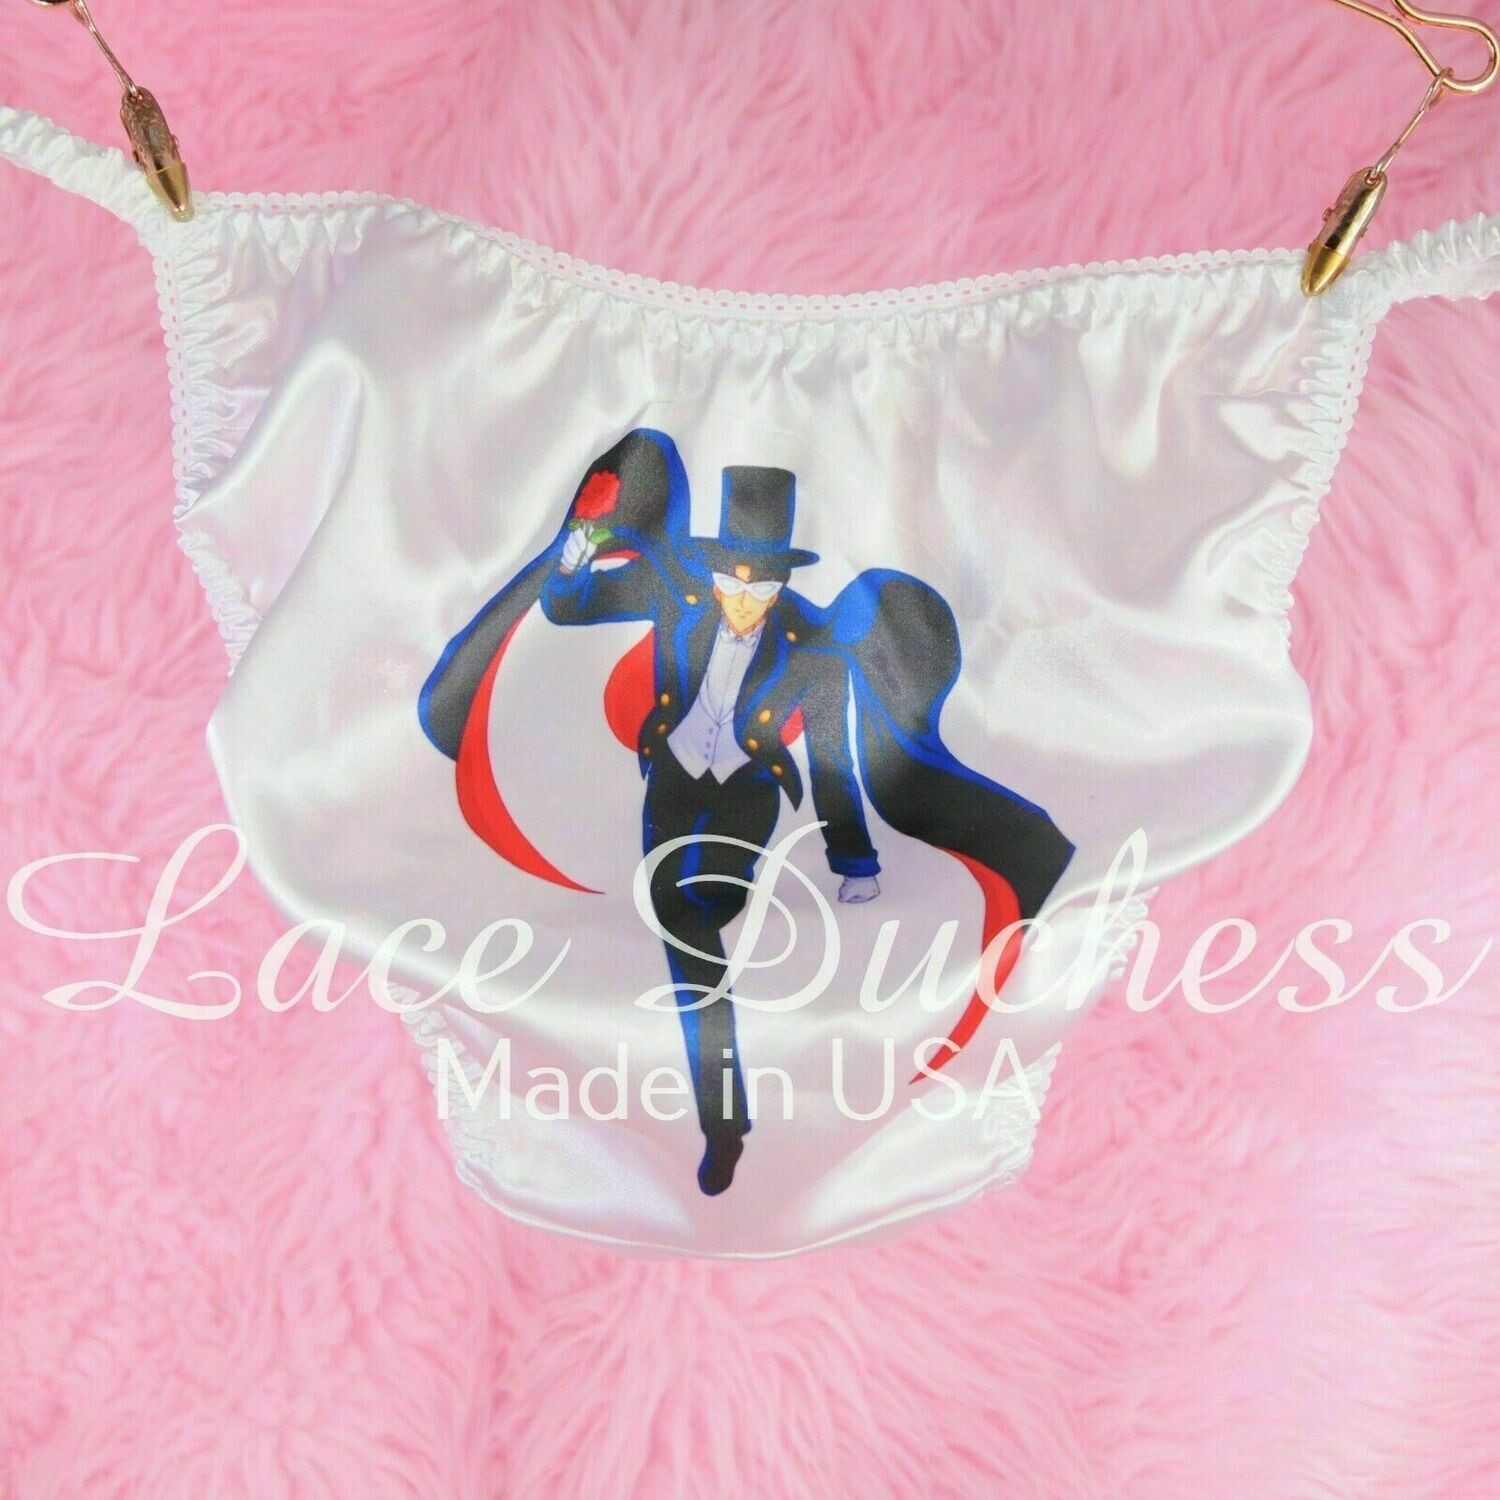 Lace Duchess Classic 80's cut Masked Tuxedo Sailor Moon Character movie print satin wet look panties sz 5 6 7 8